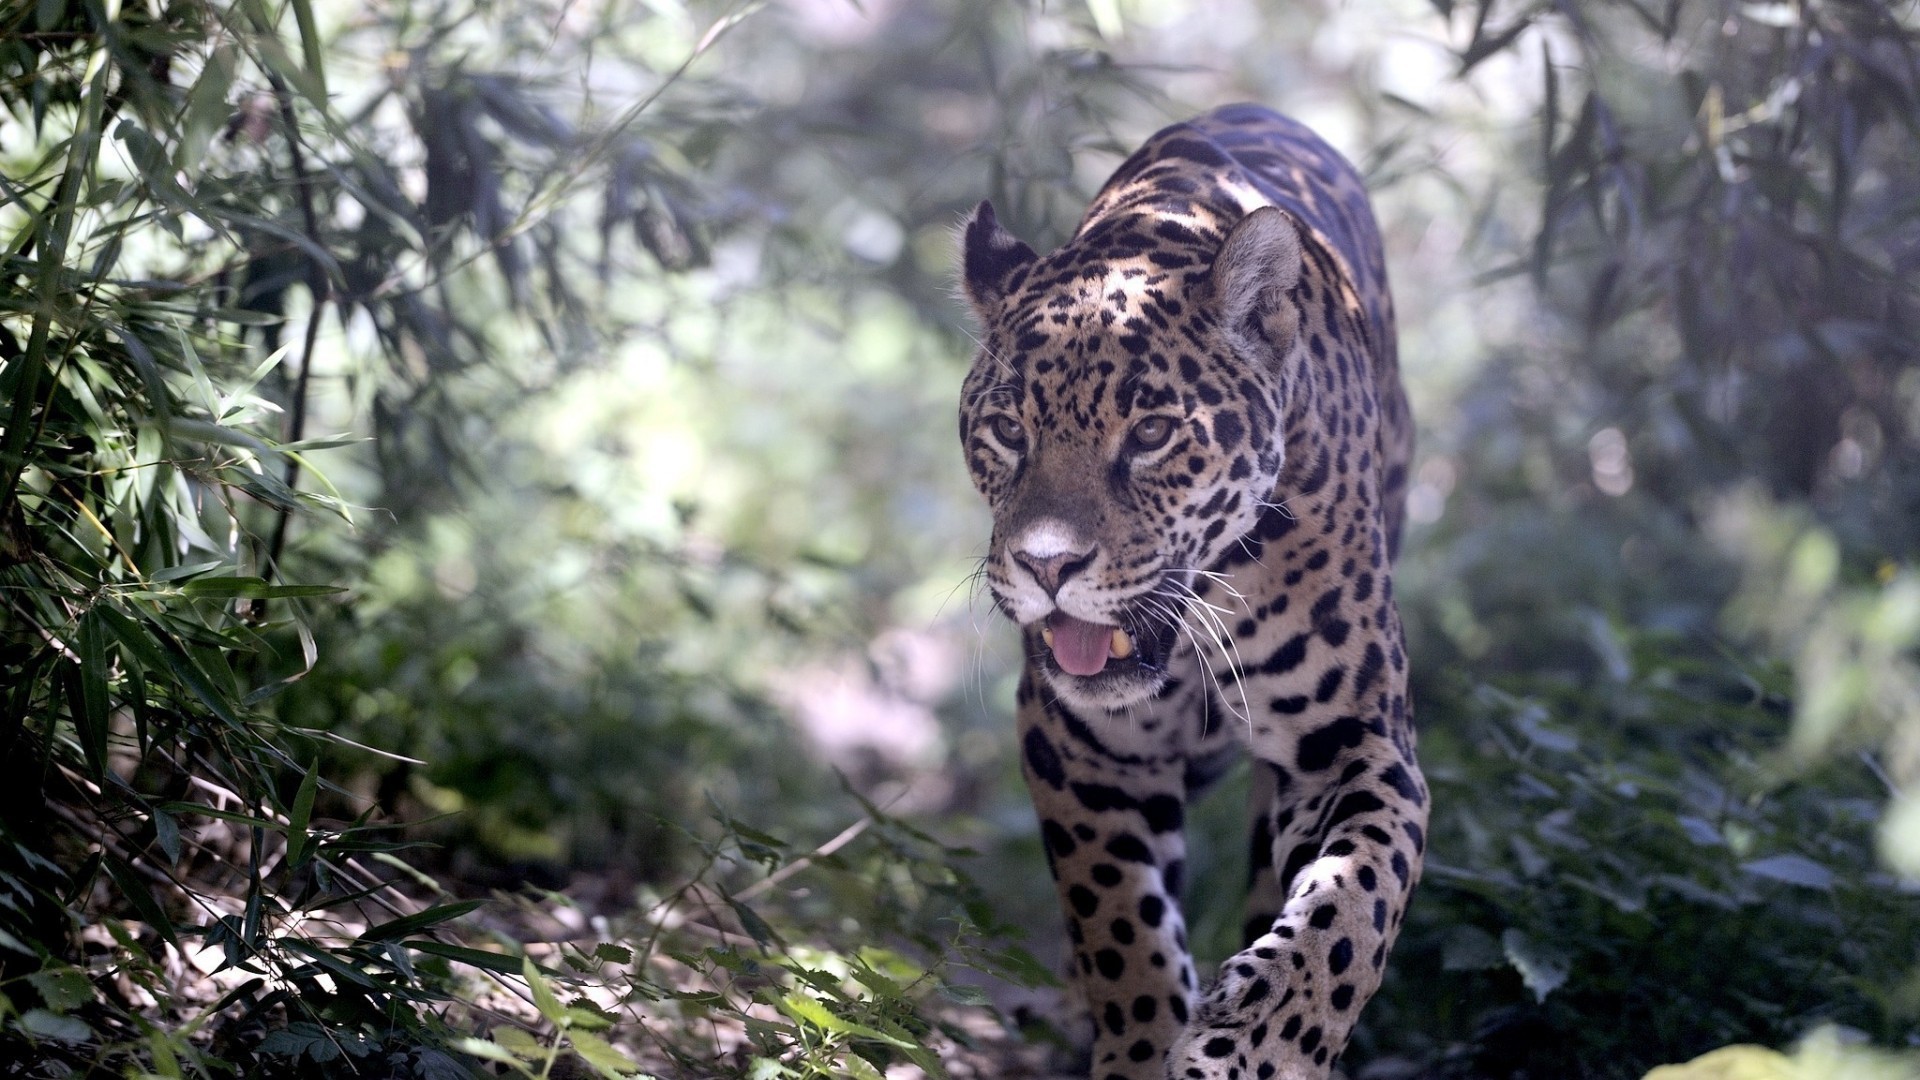 General 1920x1080 animals leopard undergrowth plants mammals big cats tongue out